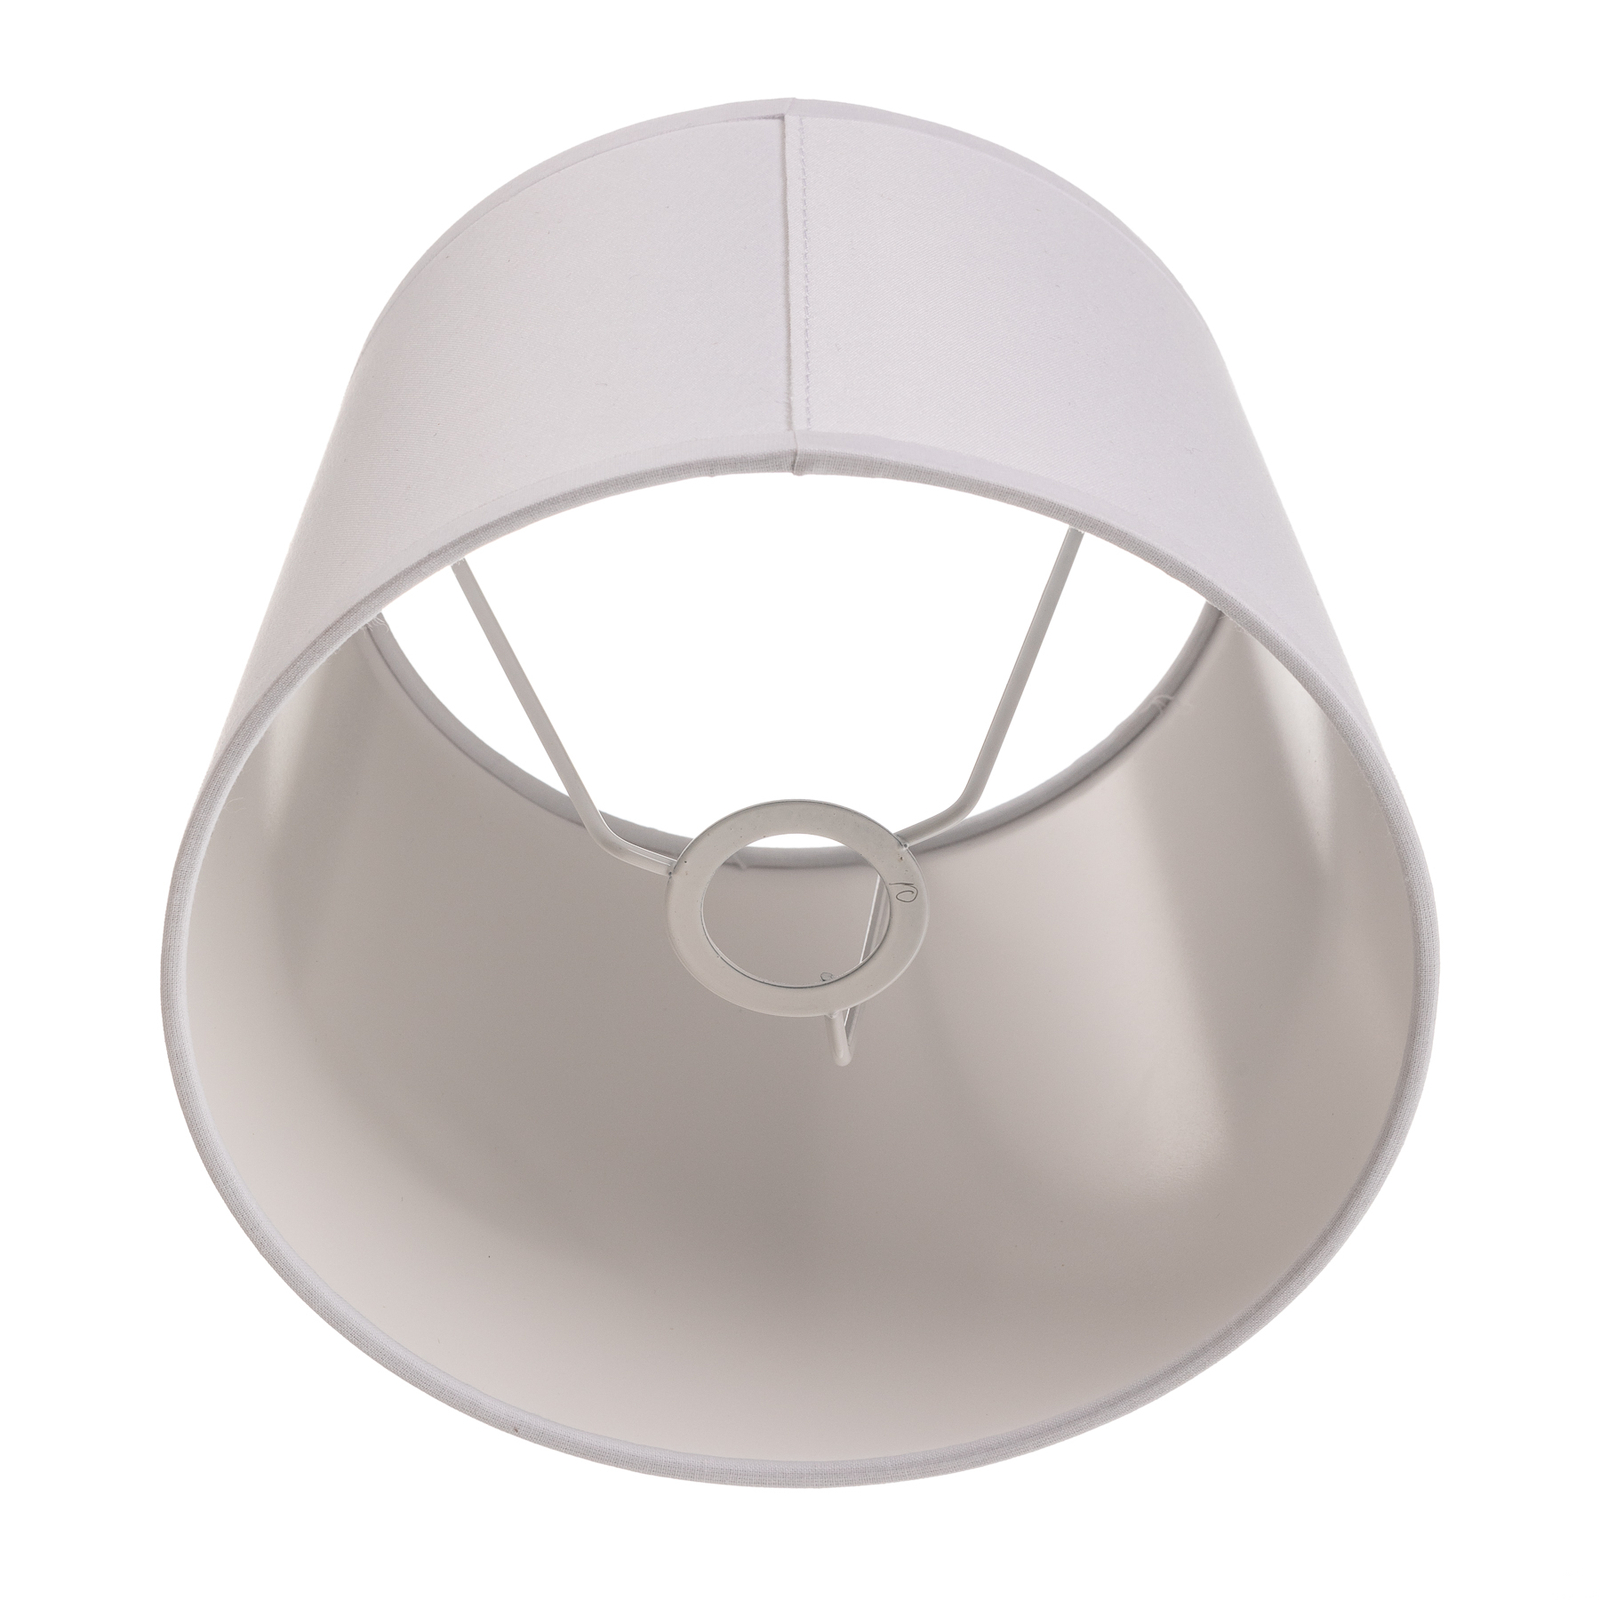 Classic S lampshade, white